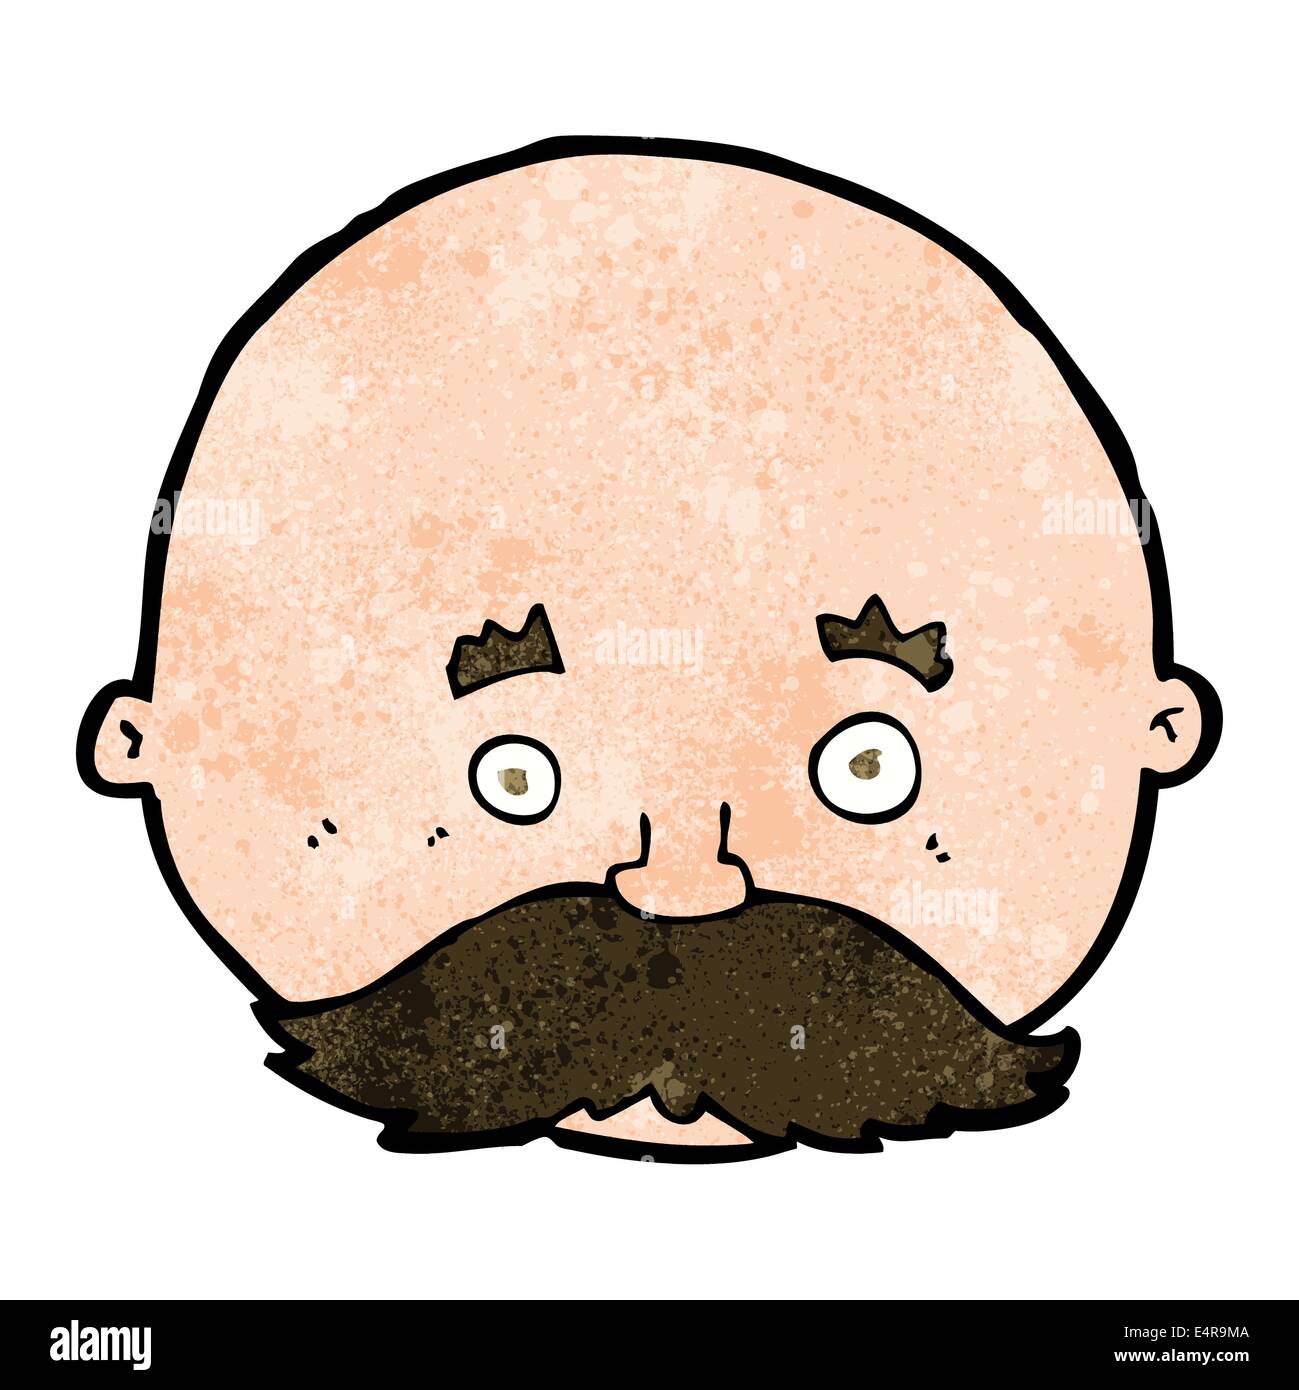 Bald guy with mustache cartoon